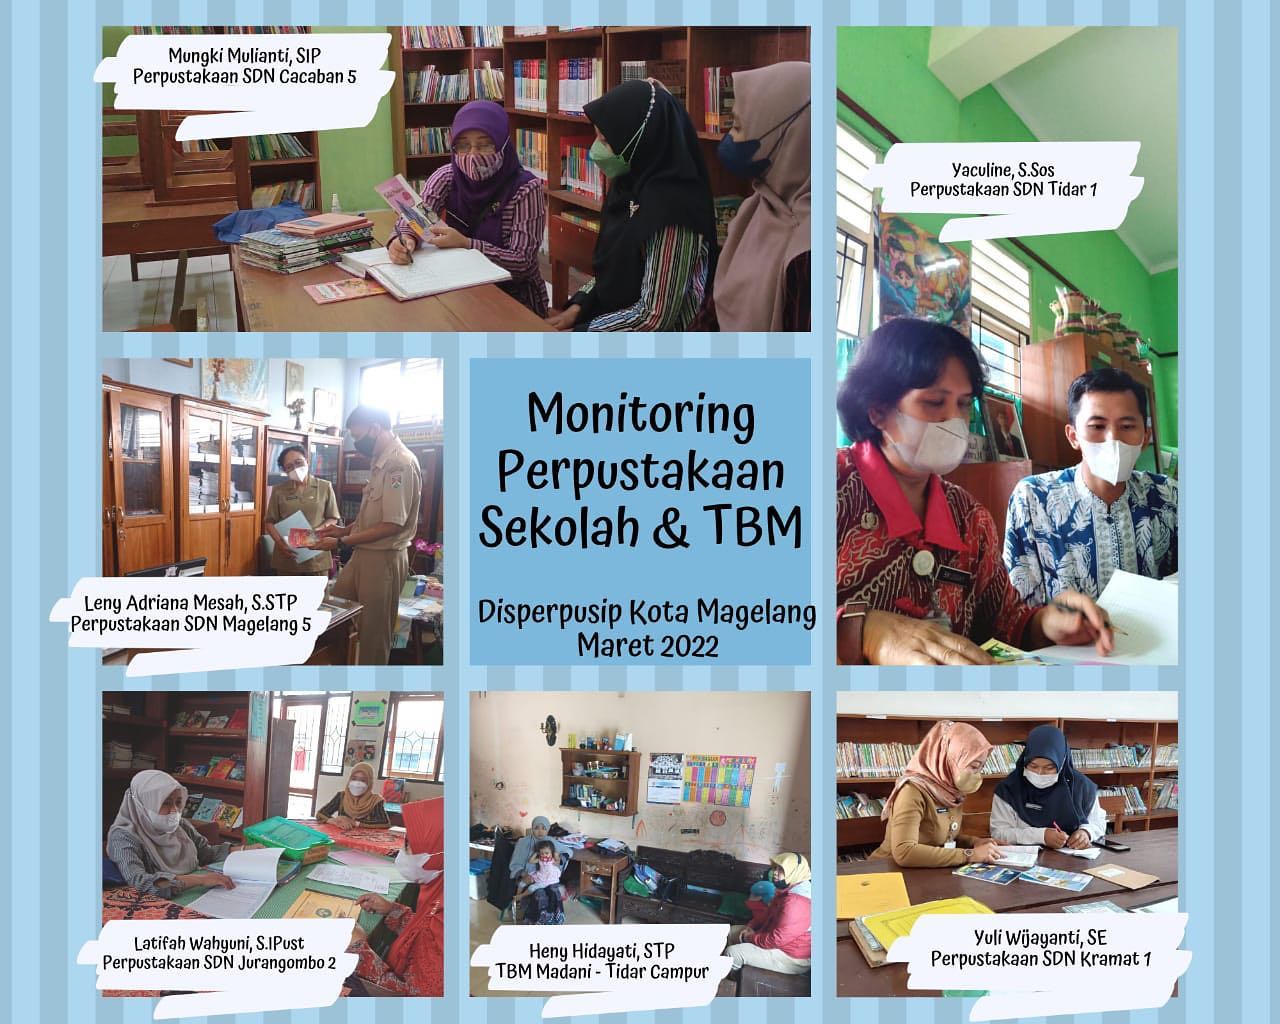 Monitoring Perpustakaan Sekolah & TBM Disperpusip Kota Magelang Bulan Maret 2022